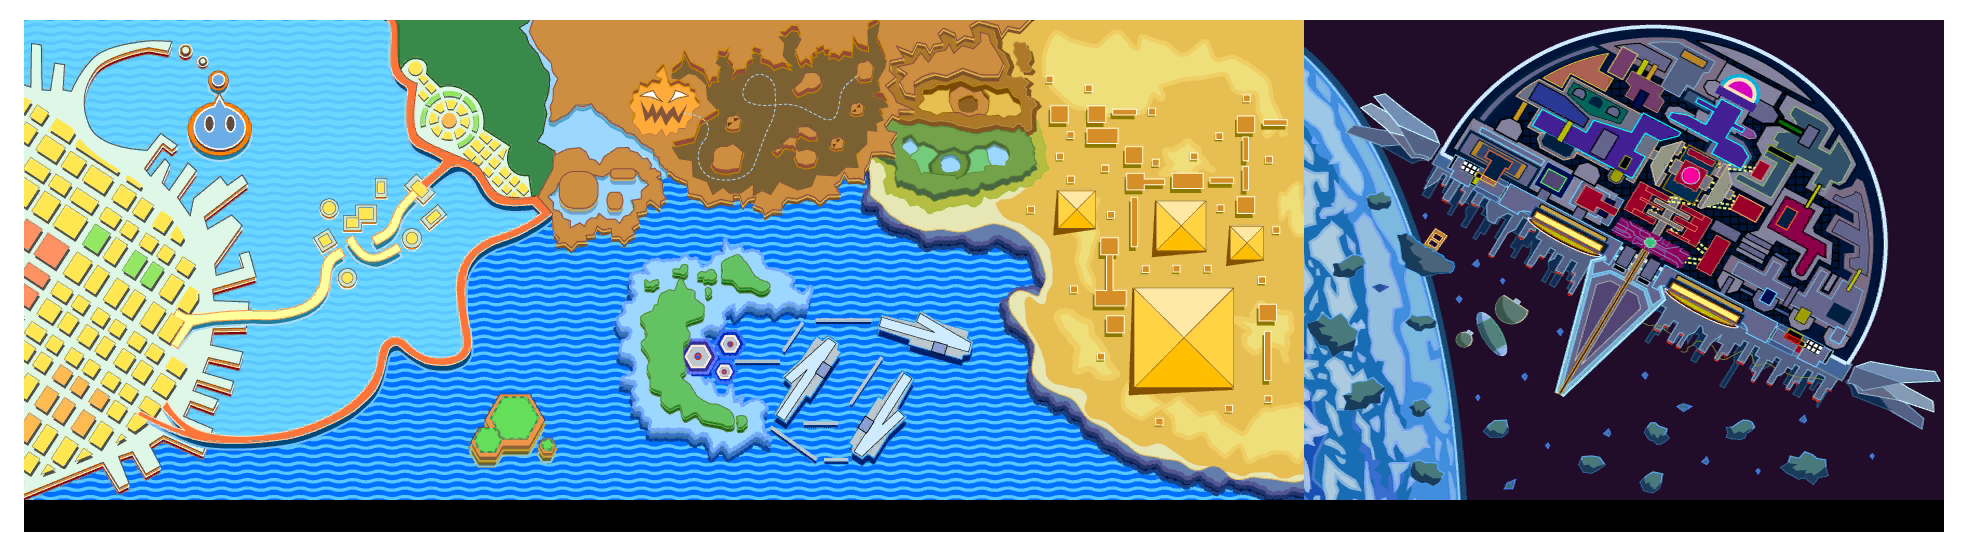 Sonic Adventure 2: Battle - Level Select Map